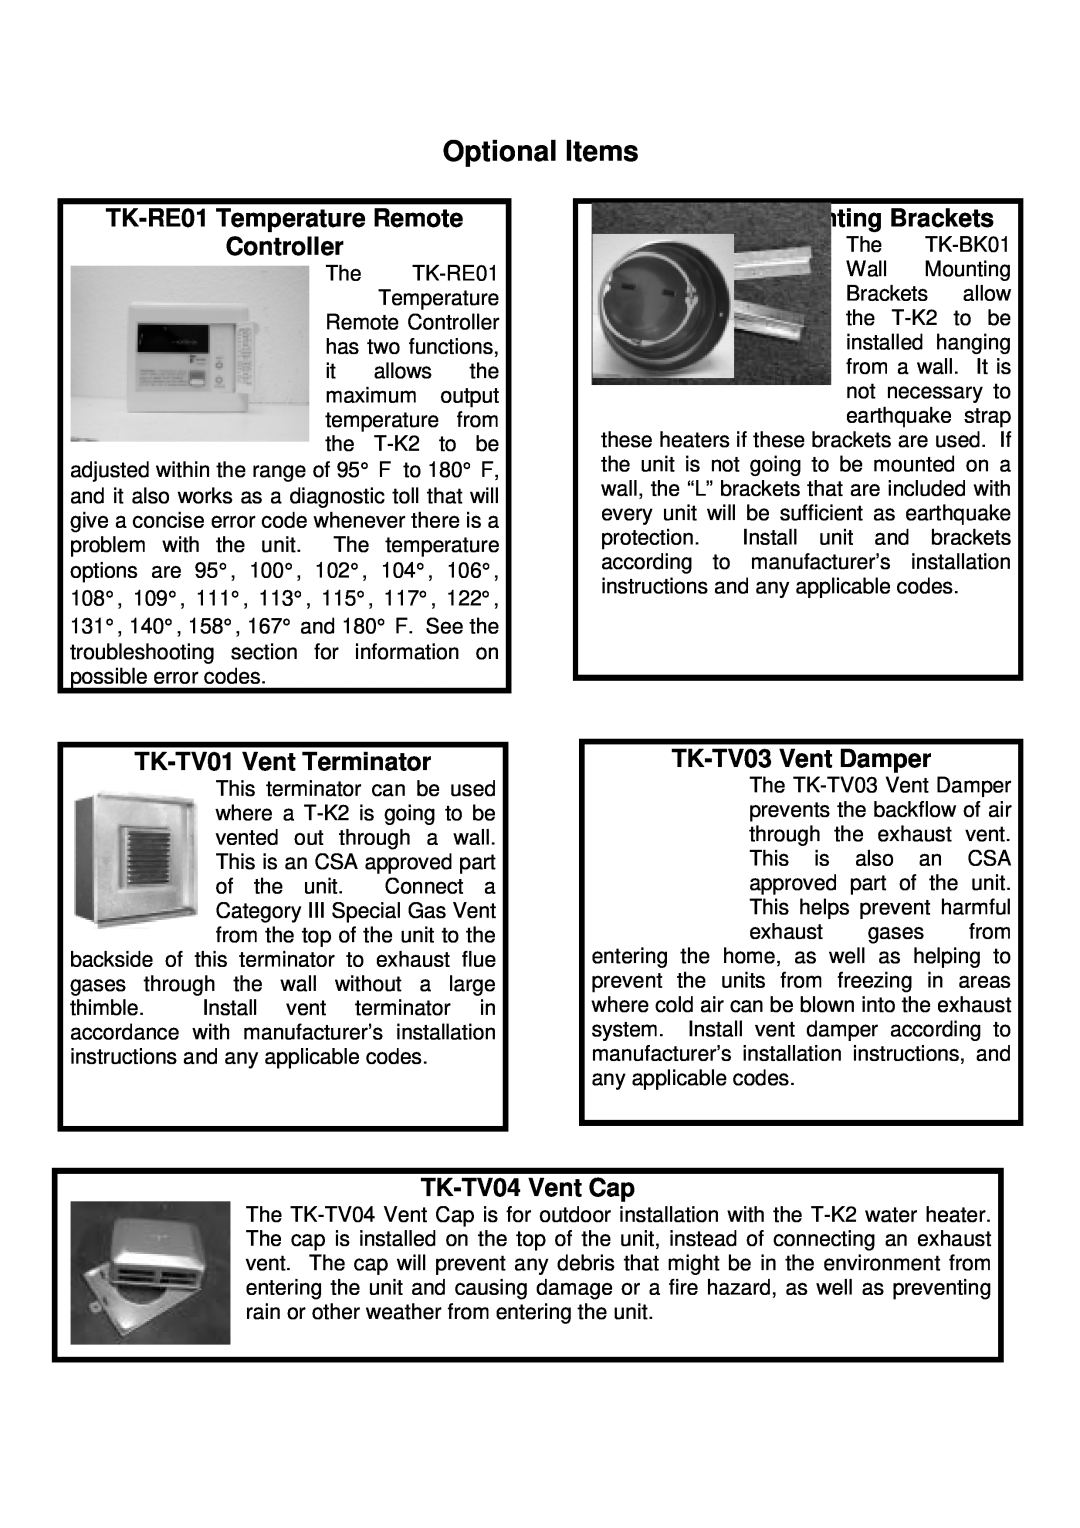 Whirlpool T-K2 Optional Items, TK-RE01Temperature Remote Controller, TK-BK01Wall Mounting Brackets, TK-TV01Vent Terminator 